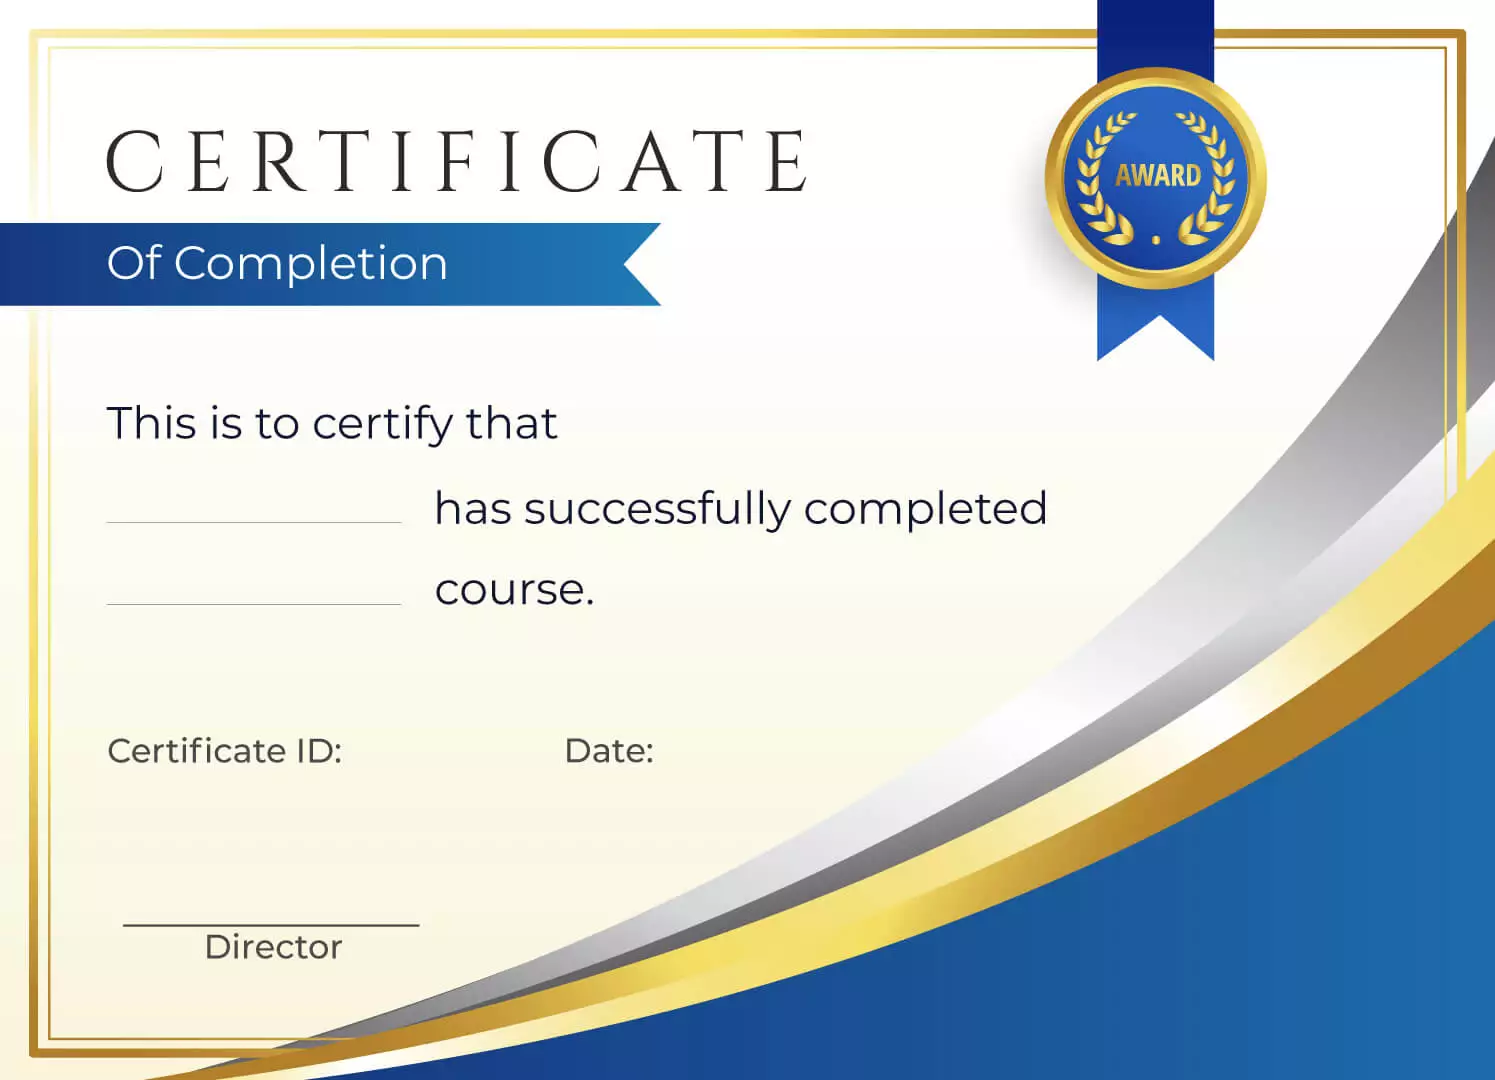 Tableau Certification Training in Dubai